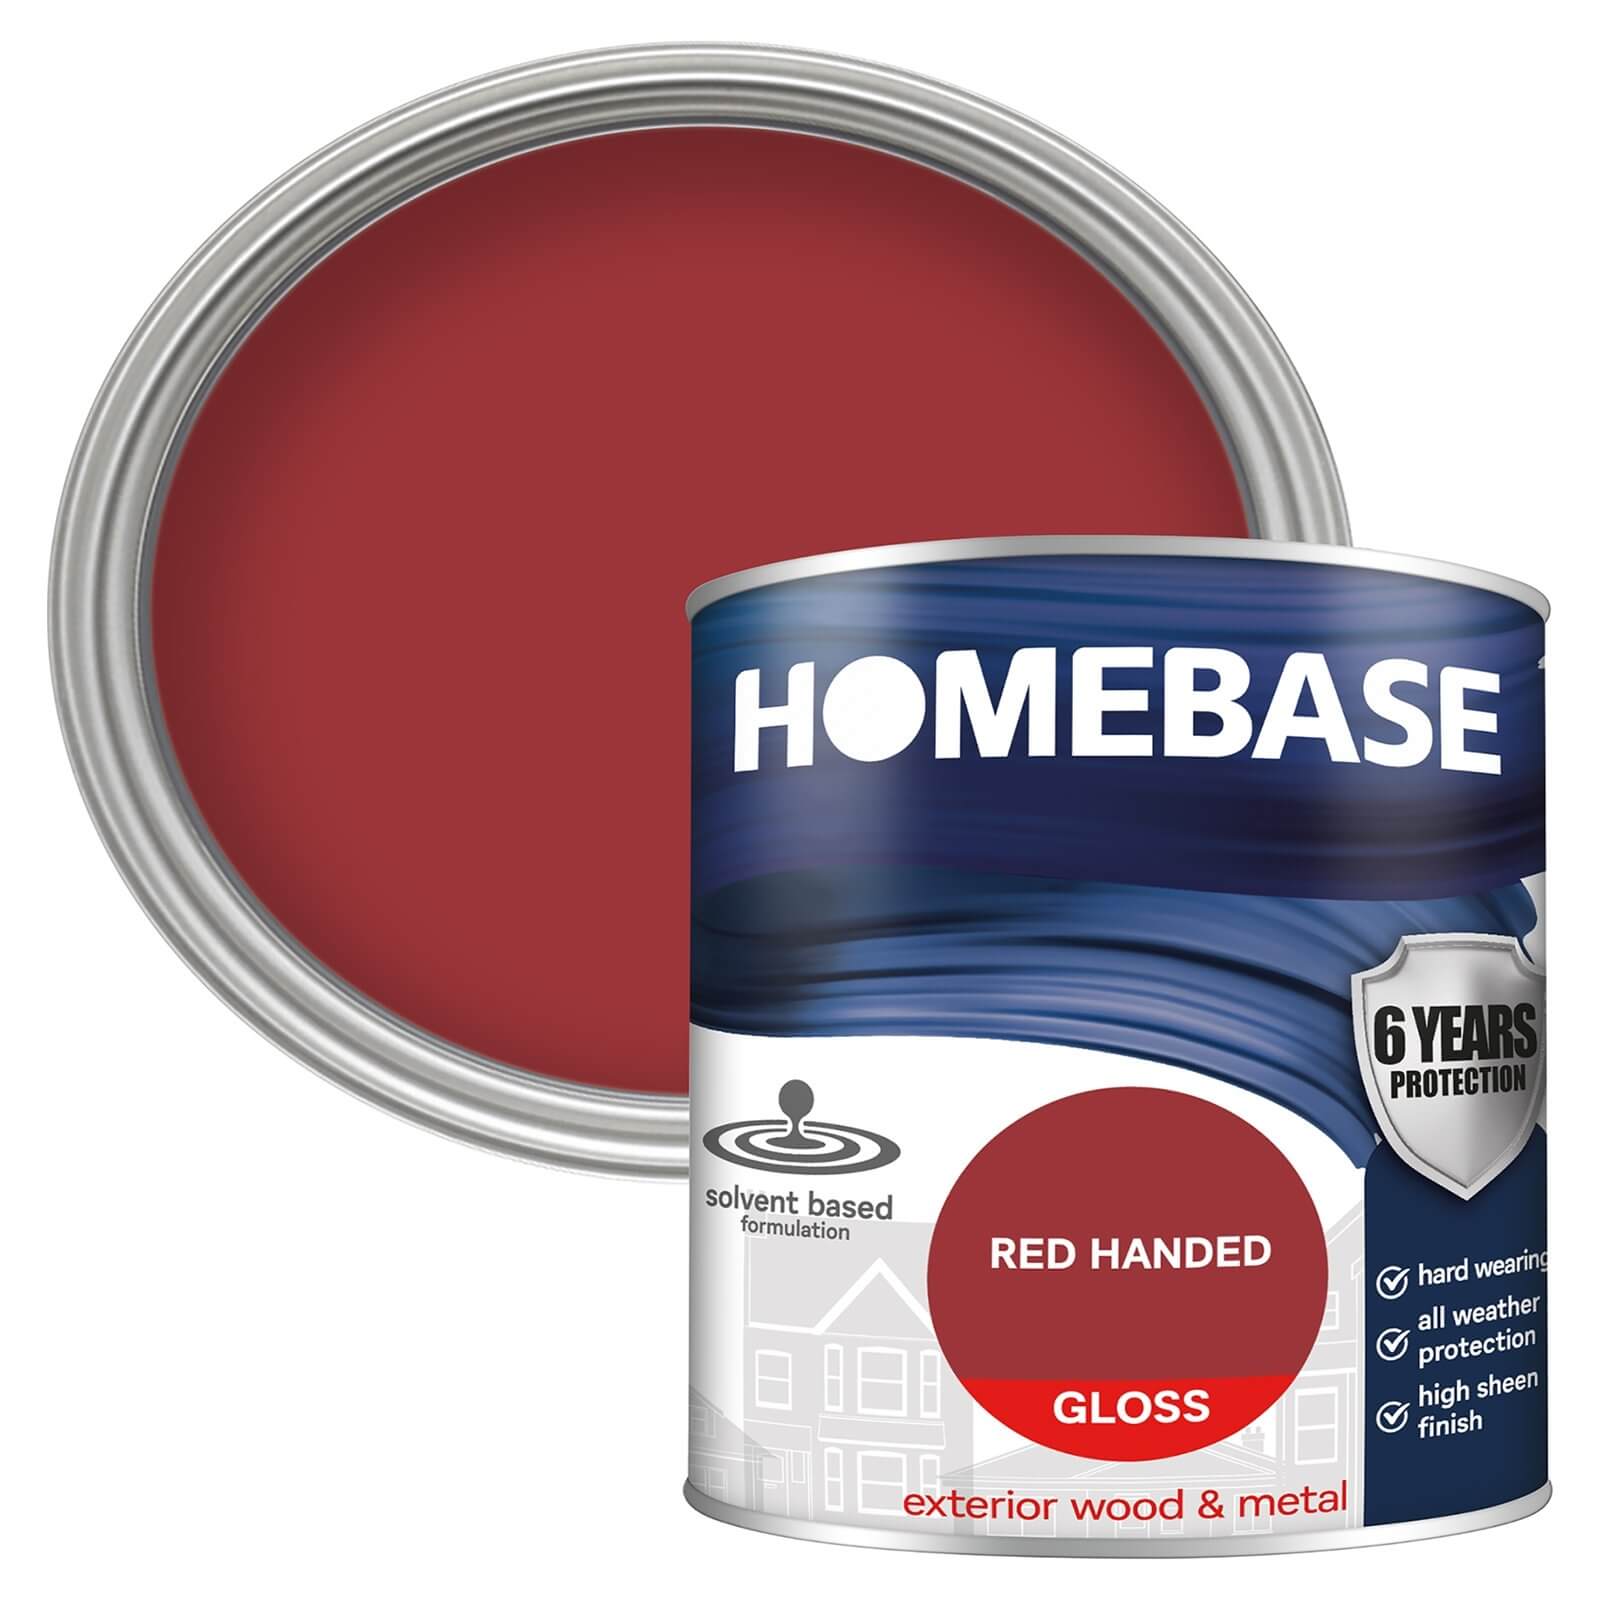 Homebase Exterior Gloss Paint - Red Handed 750ml